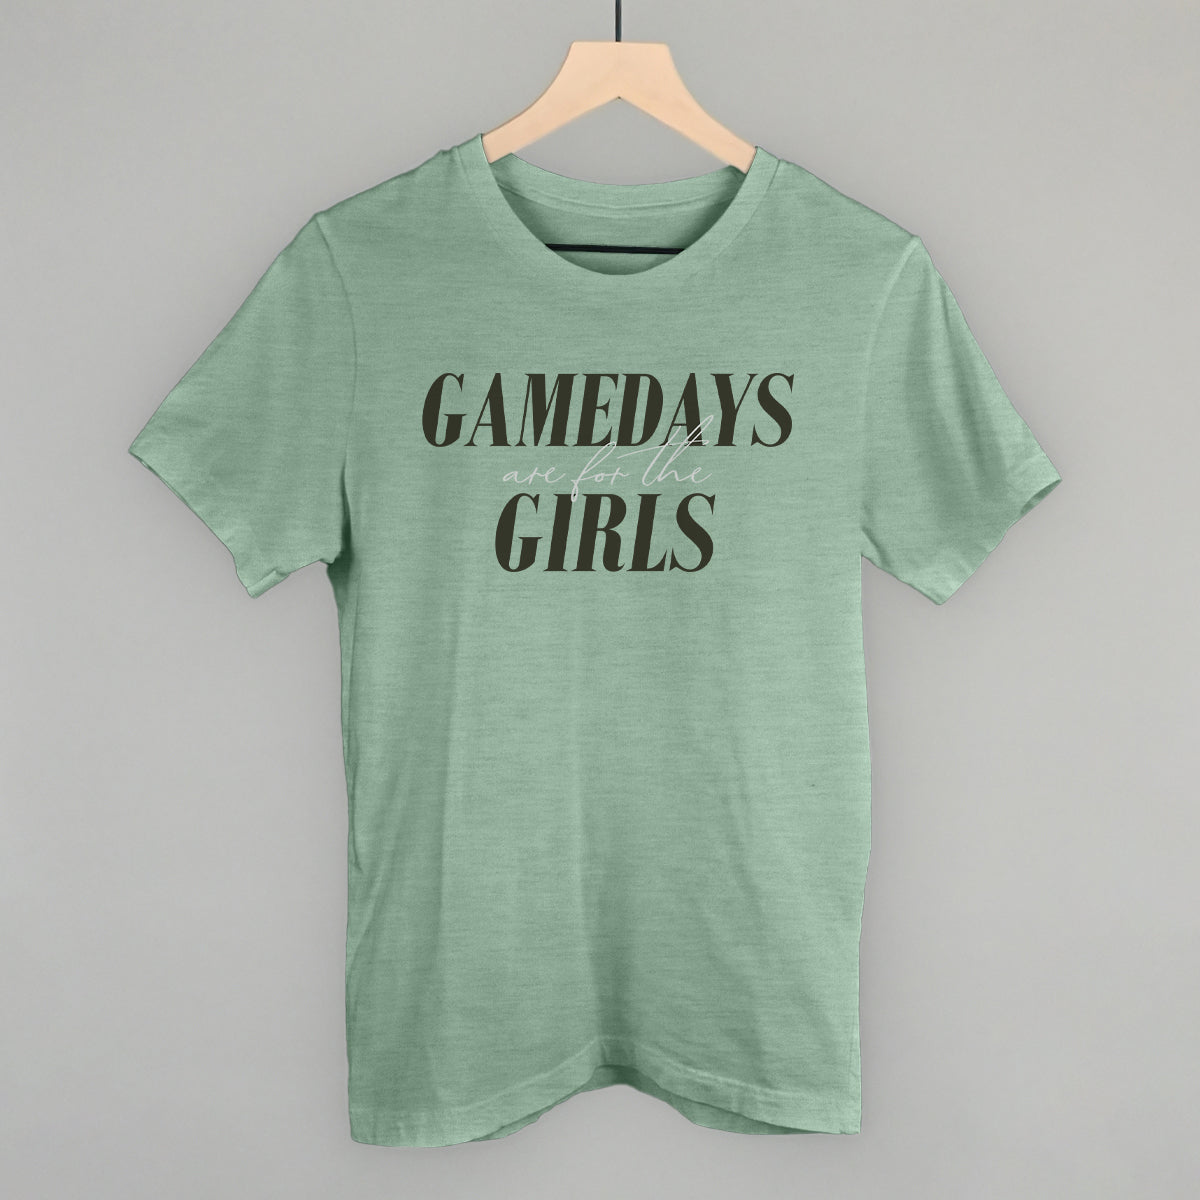 Gamedays are for the Girls (Dark)